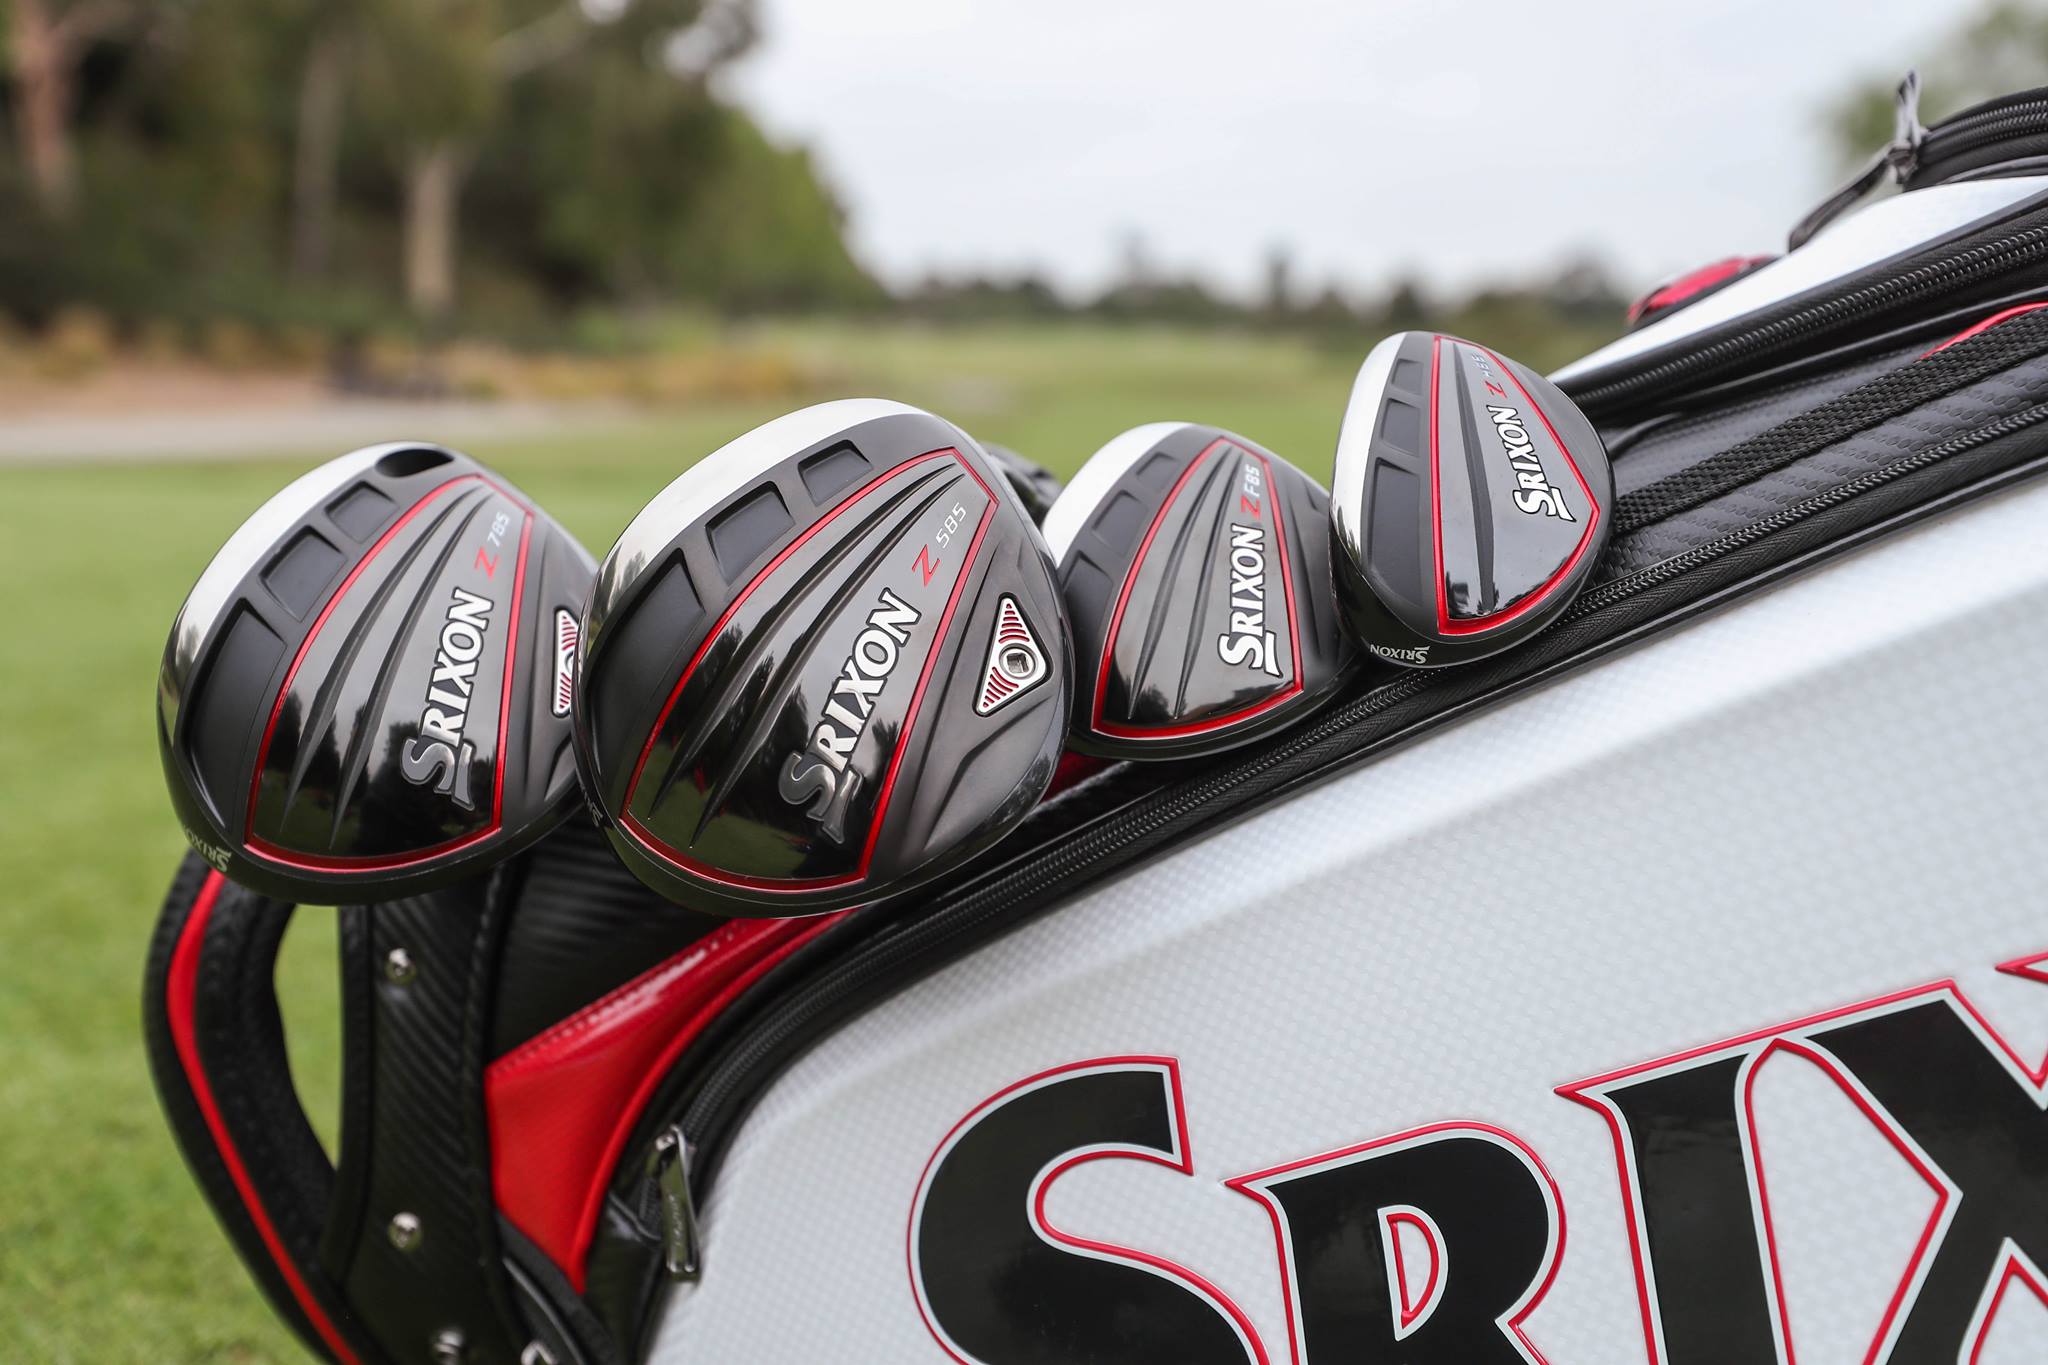 Srixon Golf Ball Fitting at Fountain Hills Golf Course - June